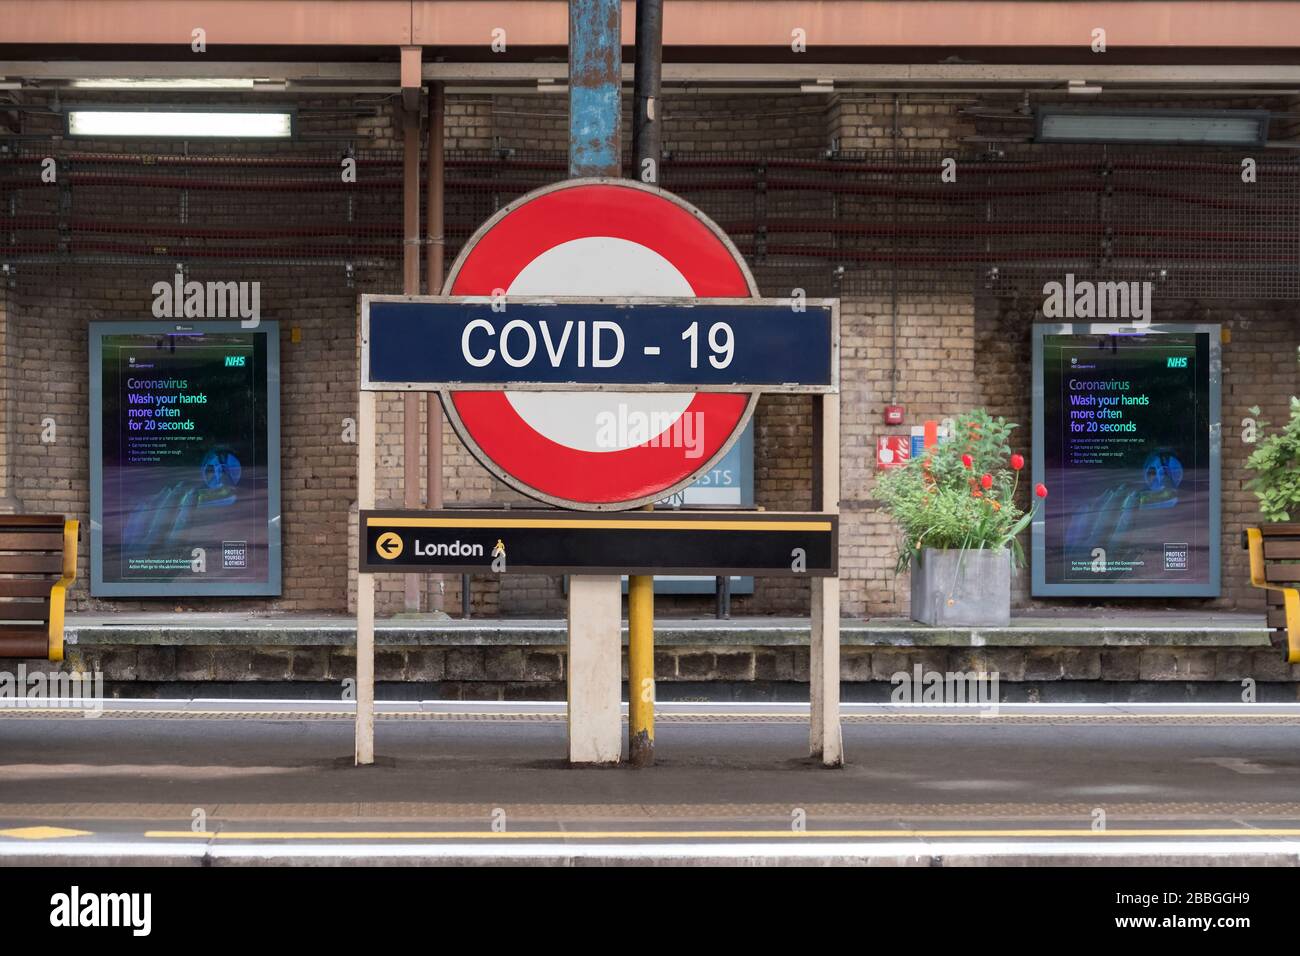 Coronavirus Covid-19 Outbreak Illustration, London Underground System, London, England, UK Stock Photo